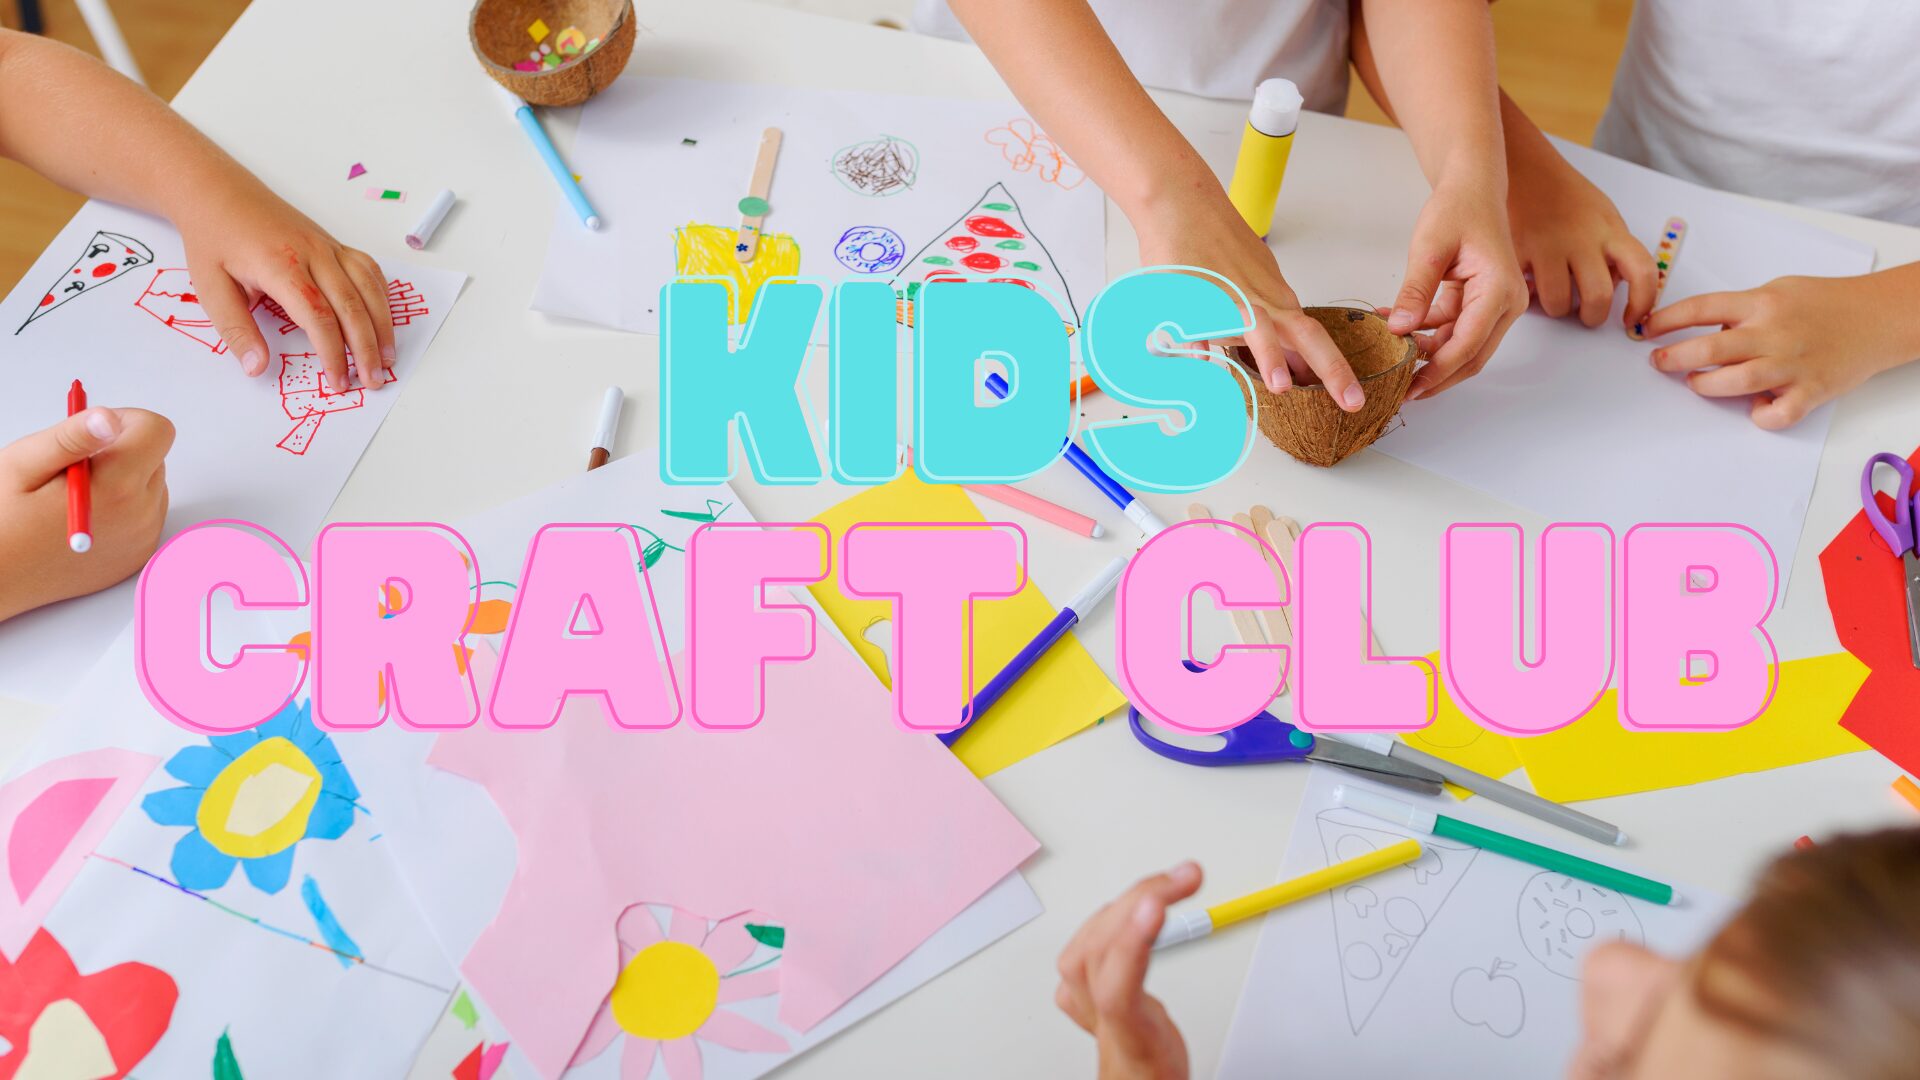 Kids Craft Club at the YMCA